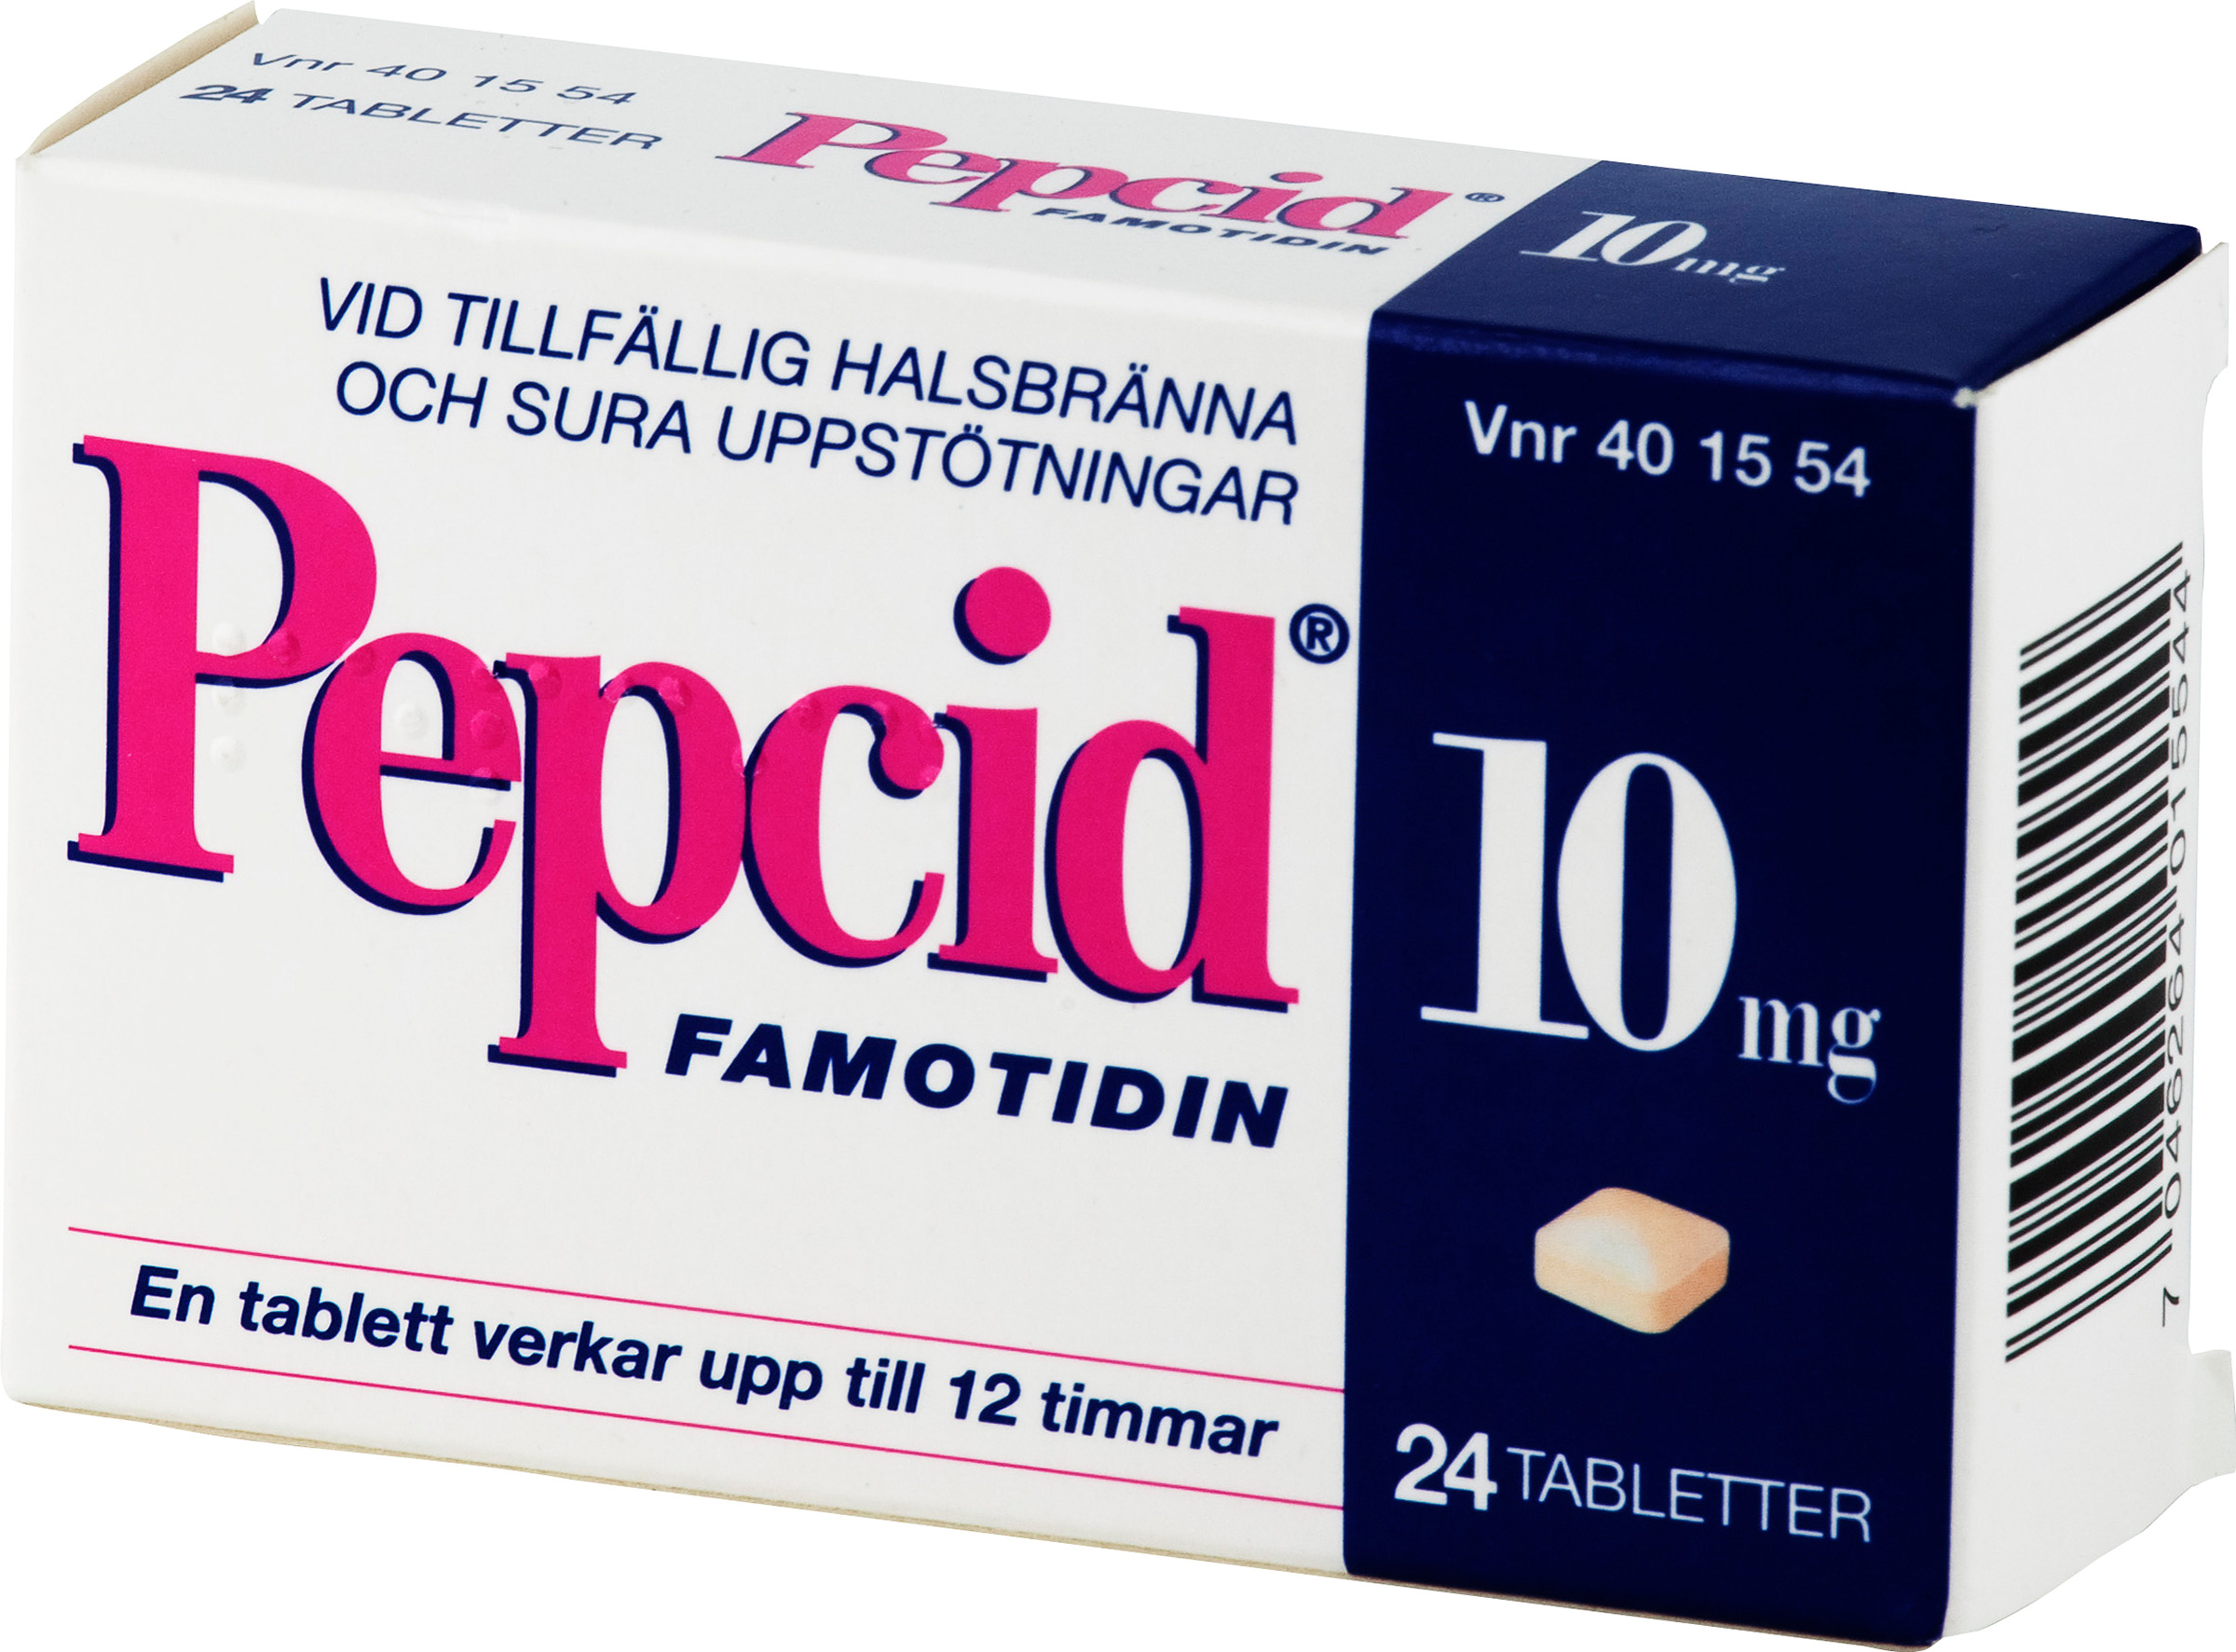 Pepcid Tablett 10mg Blister, 24tabletter